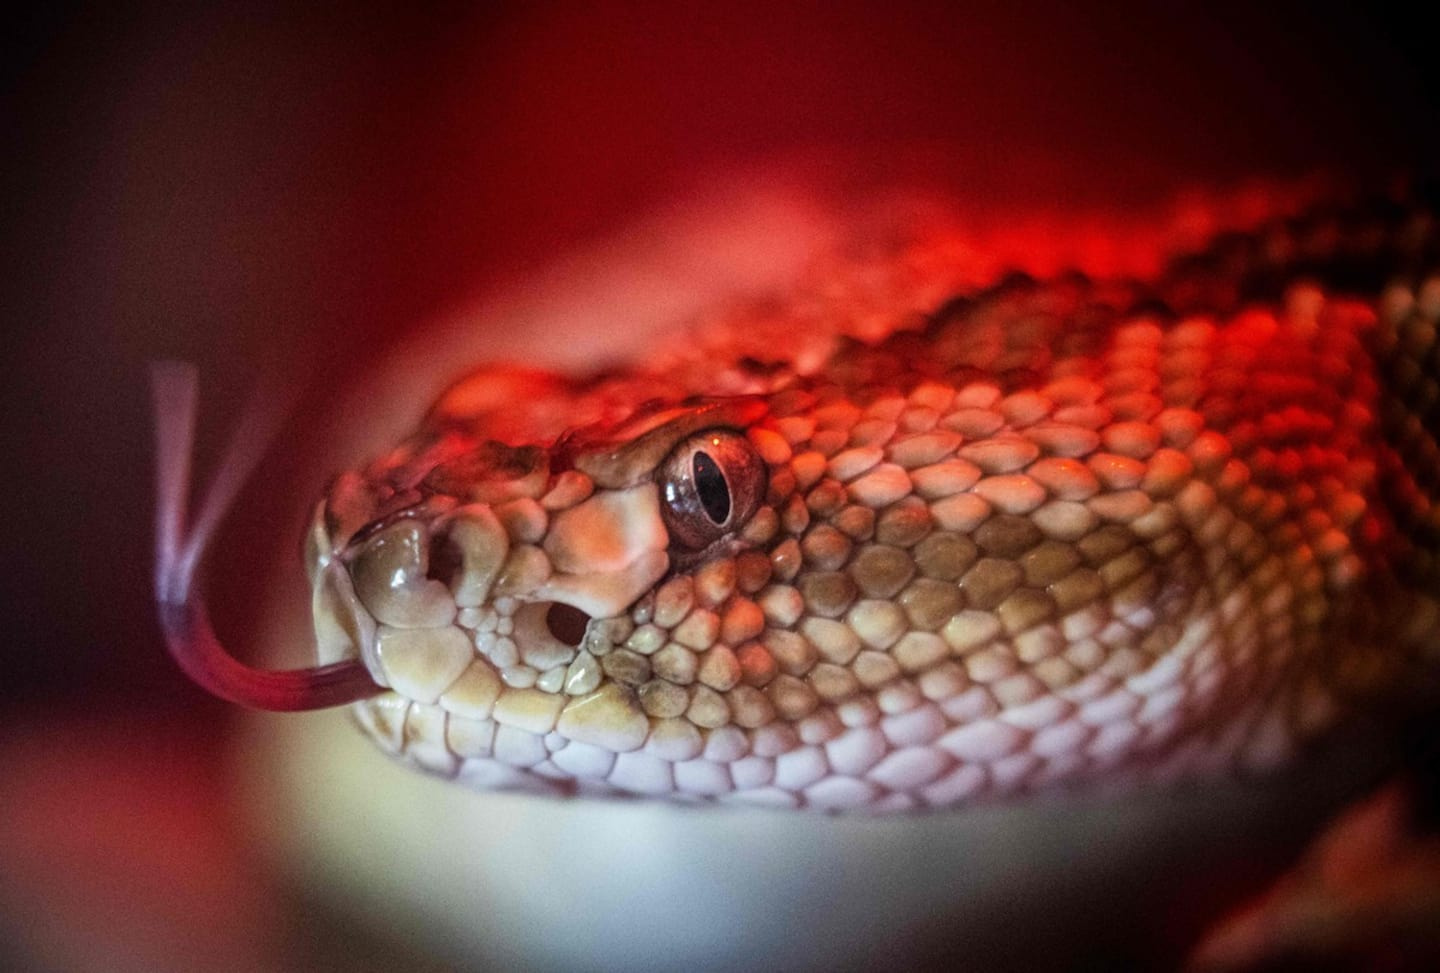 6-year-old child dies from rattlesnake bite